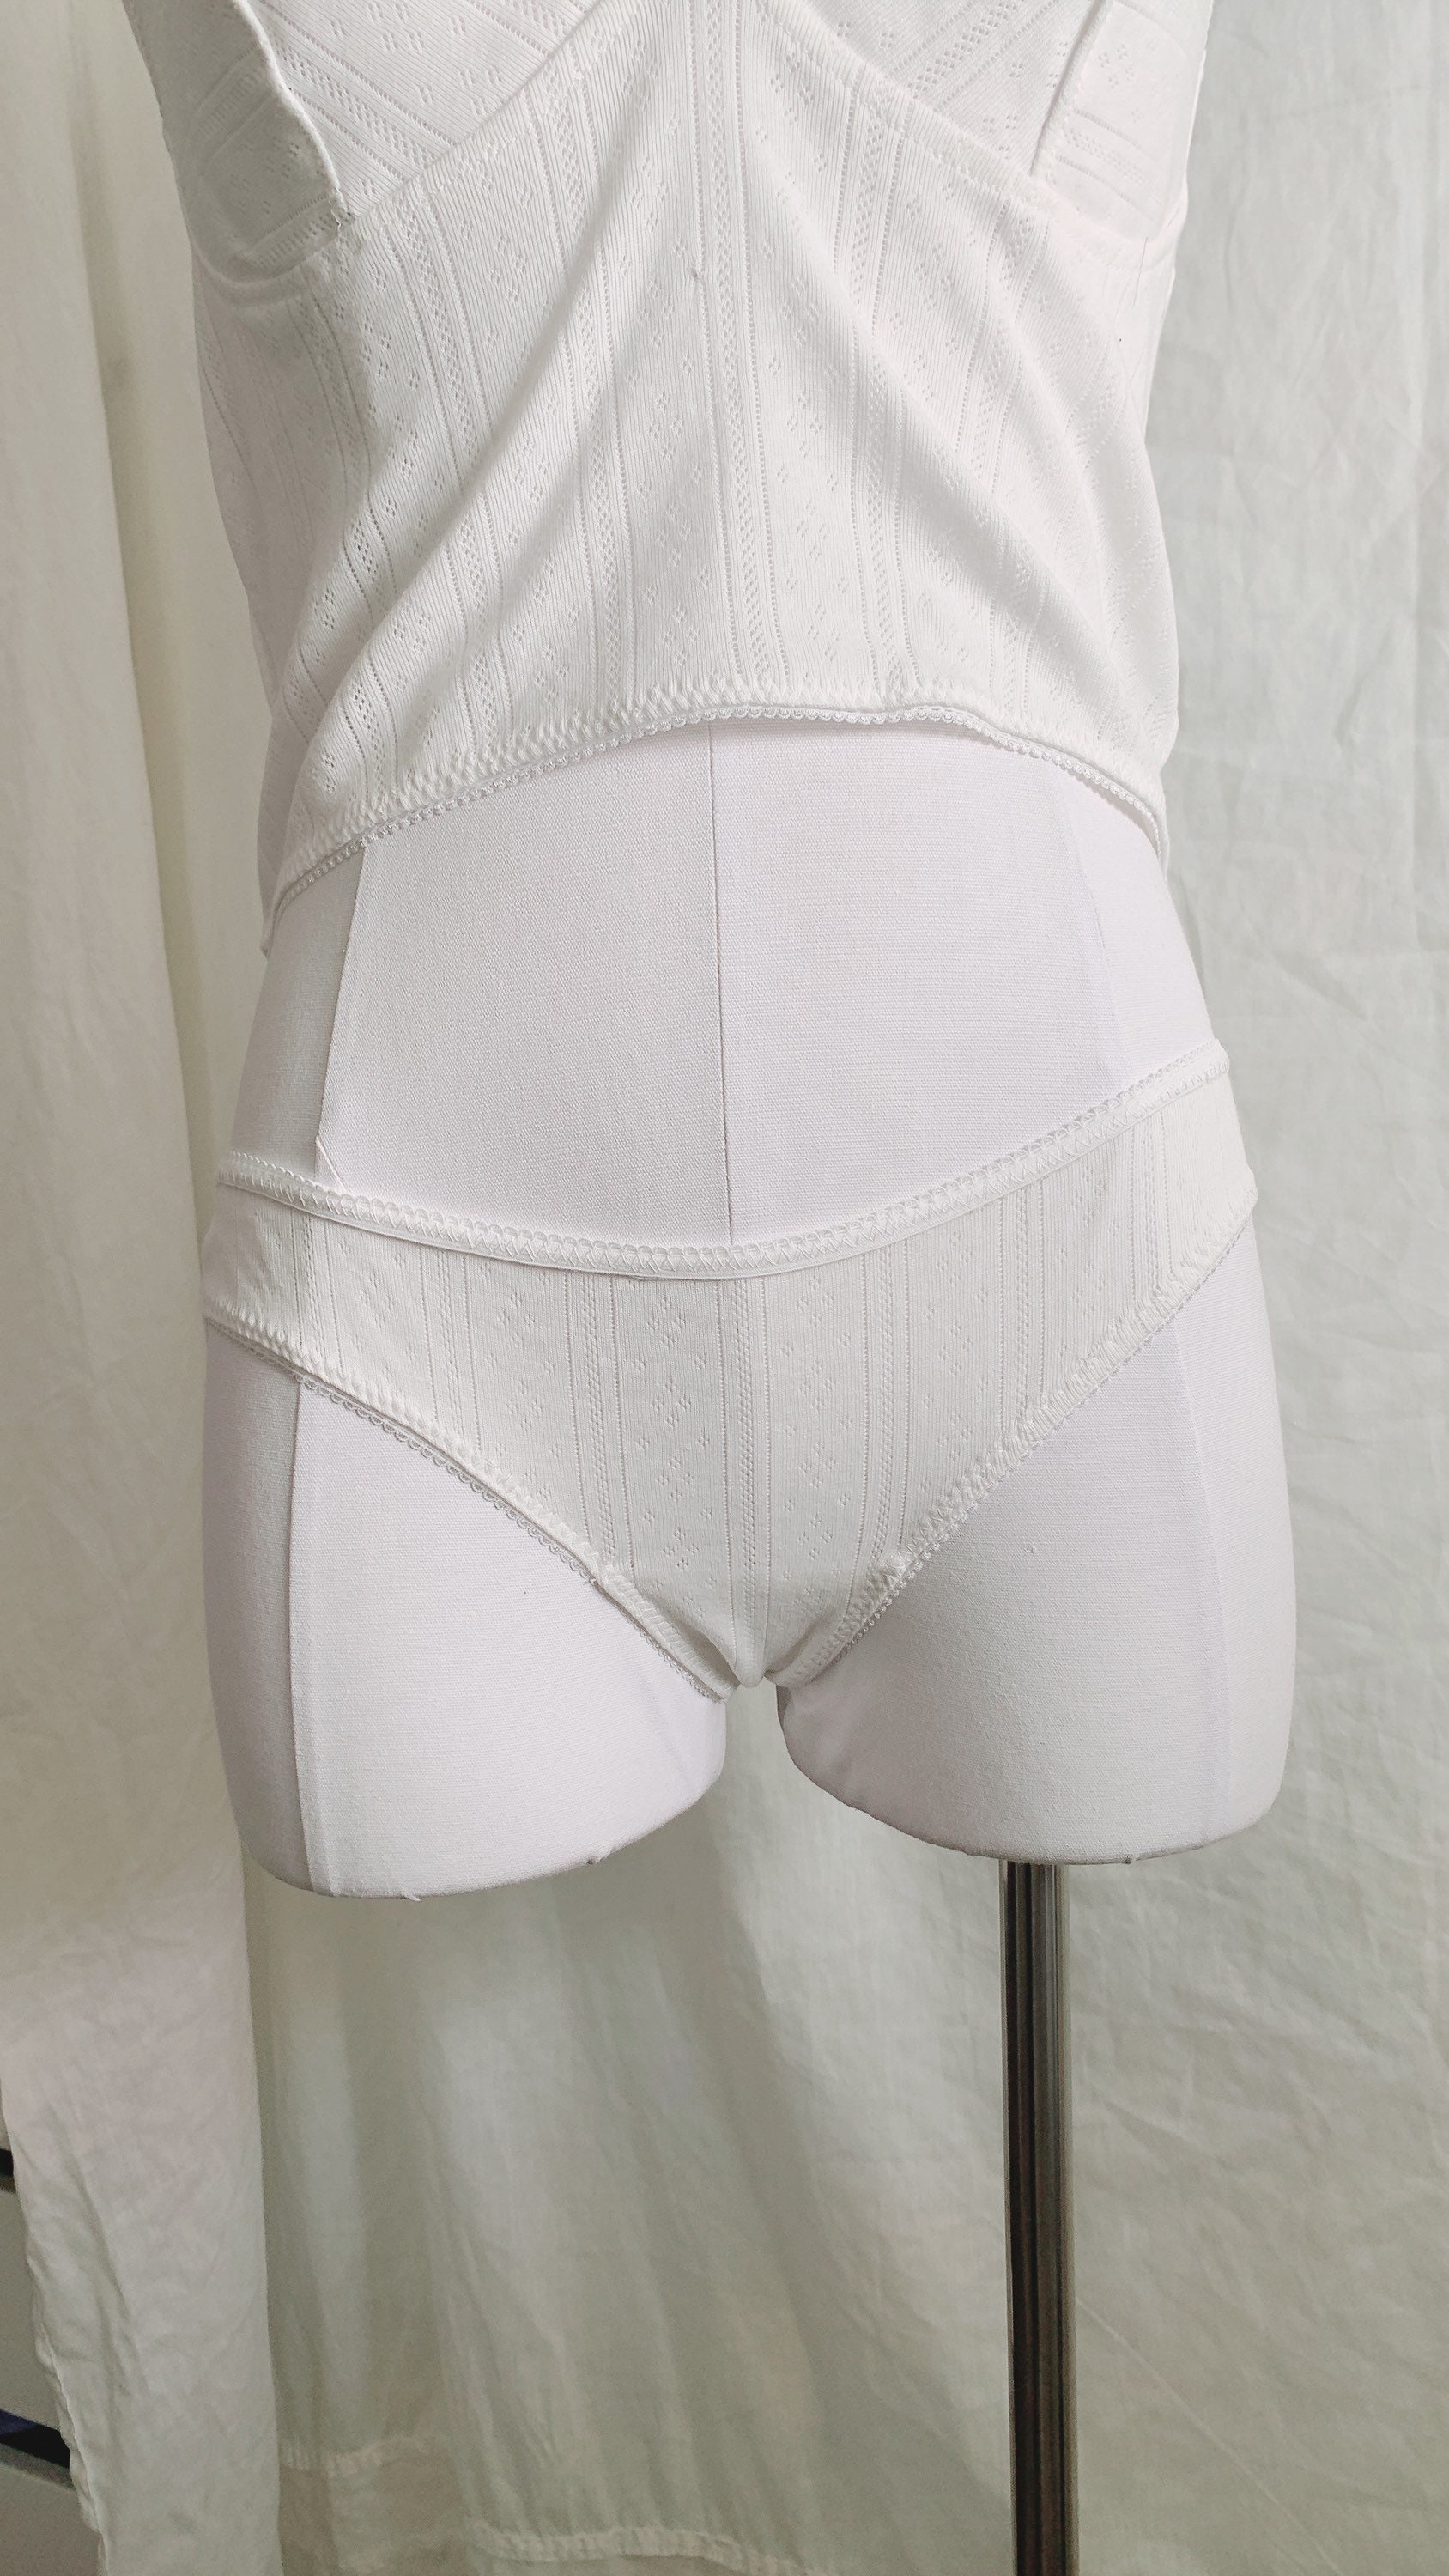 White Cotton Panties 